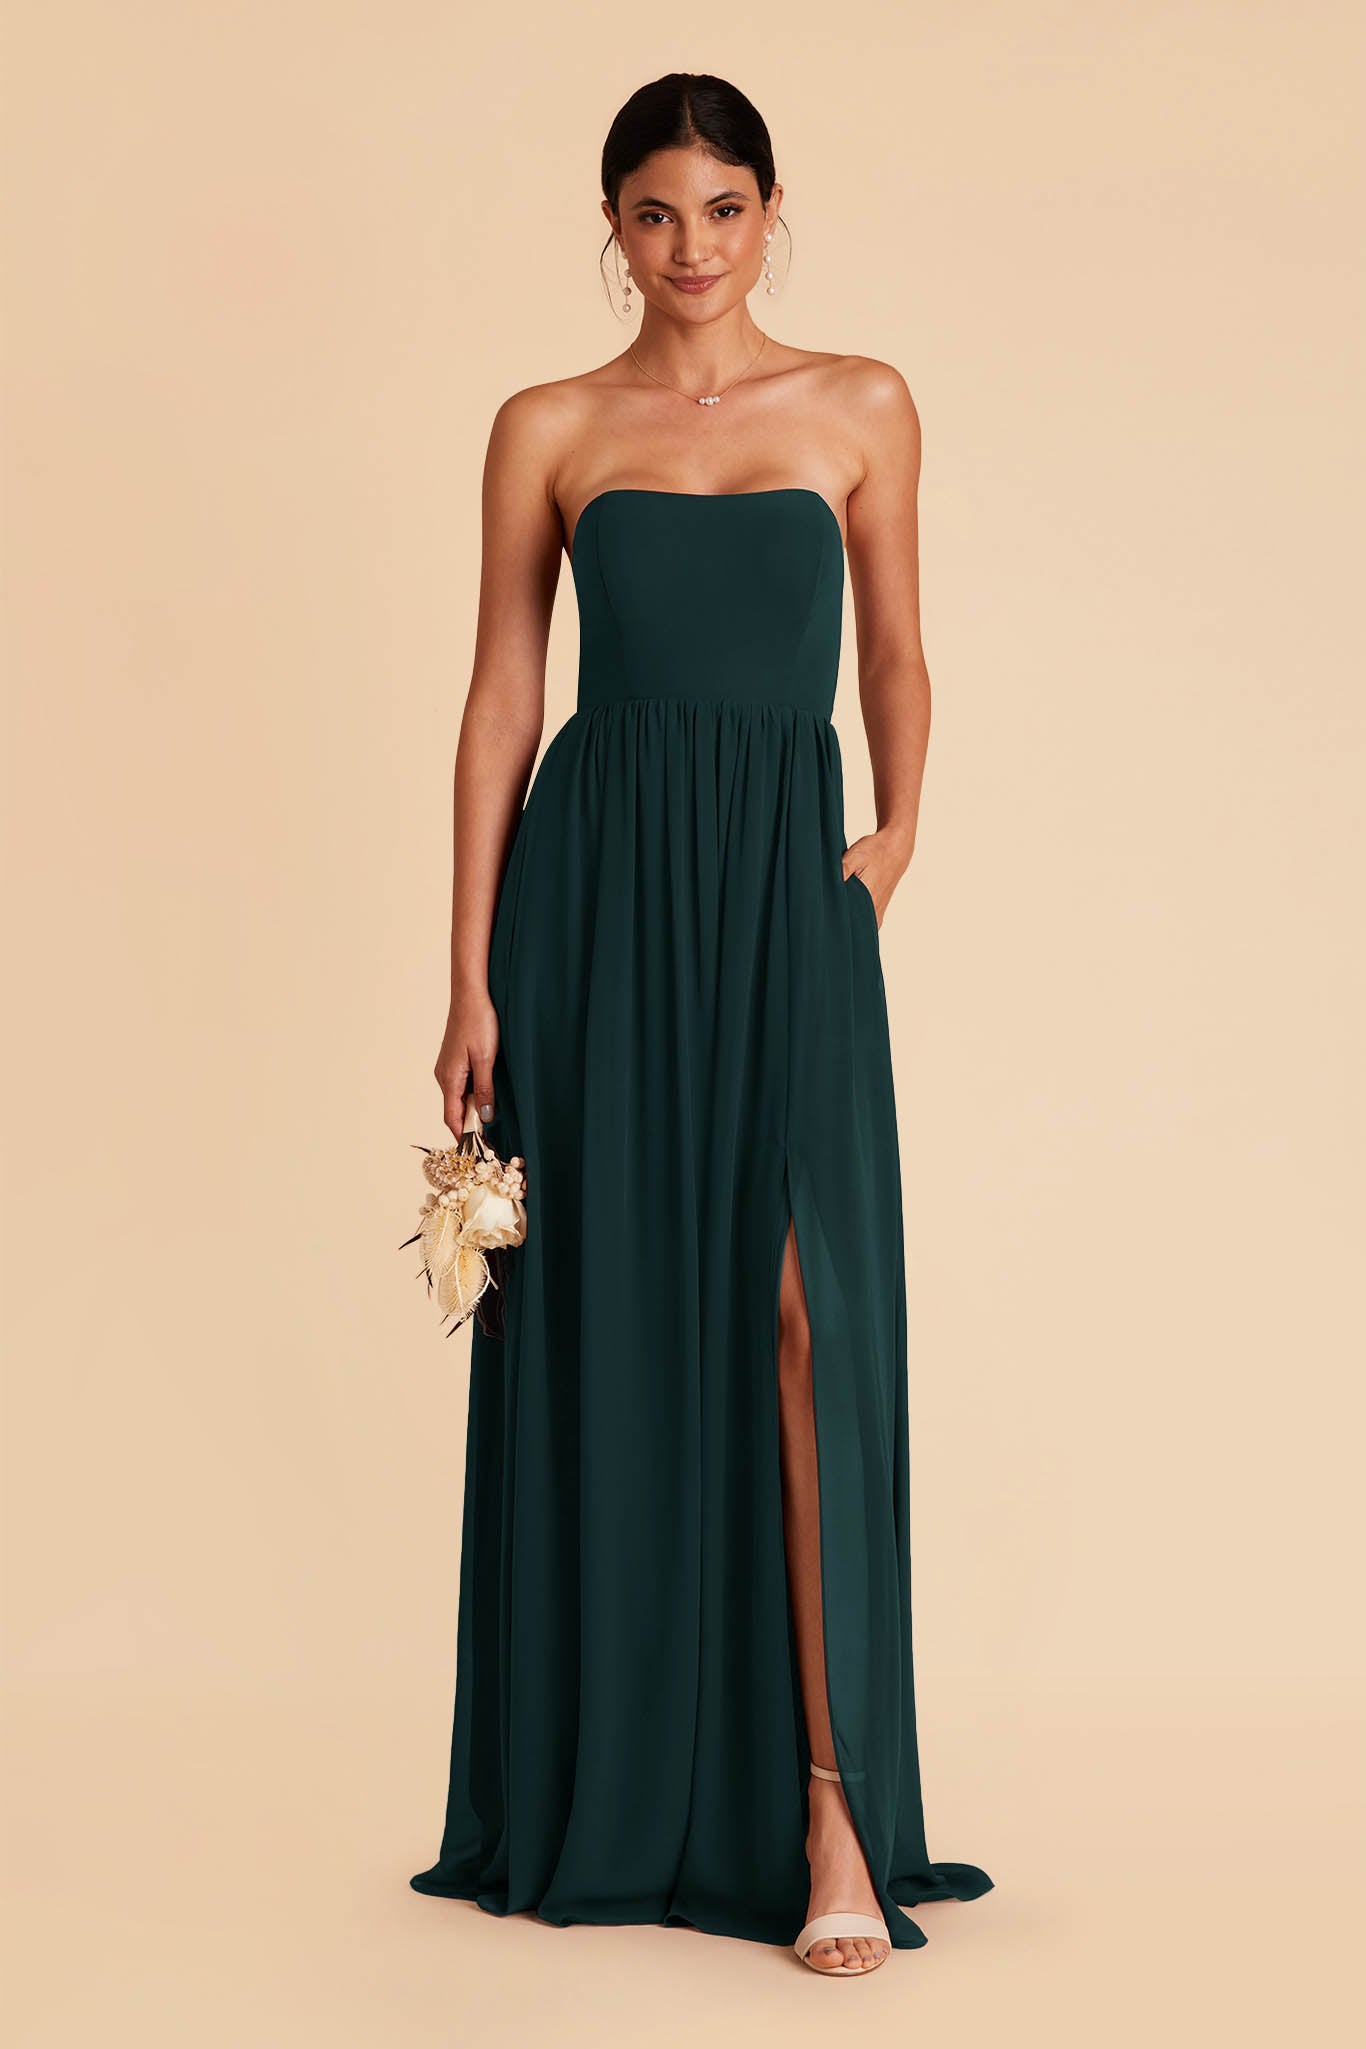 Emerald August Convertible Dress by Birdy Grey